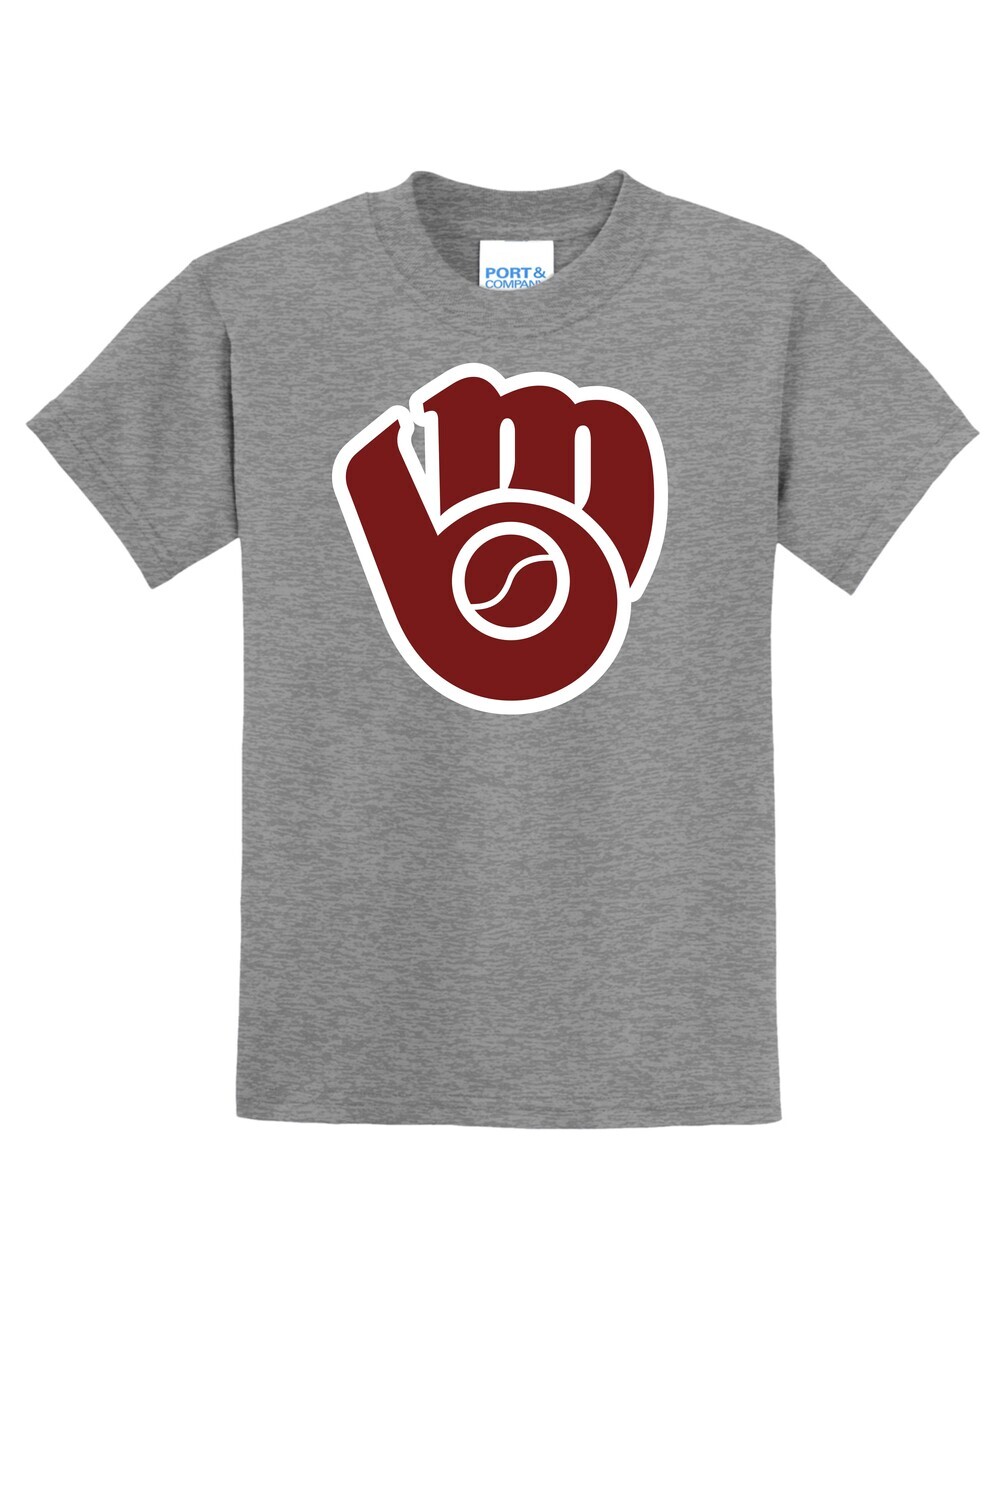 Moline Blackhawks Glove Logo  50/50 Blend Youth T-Shirt